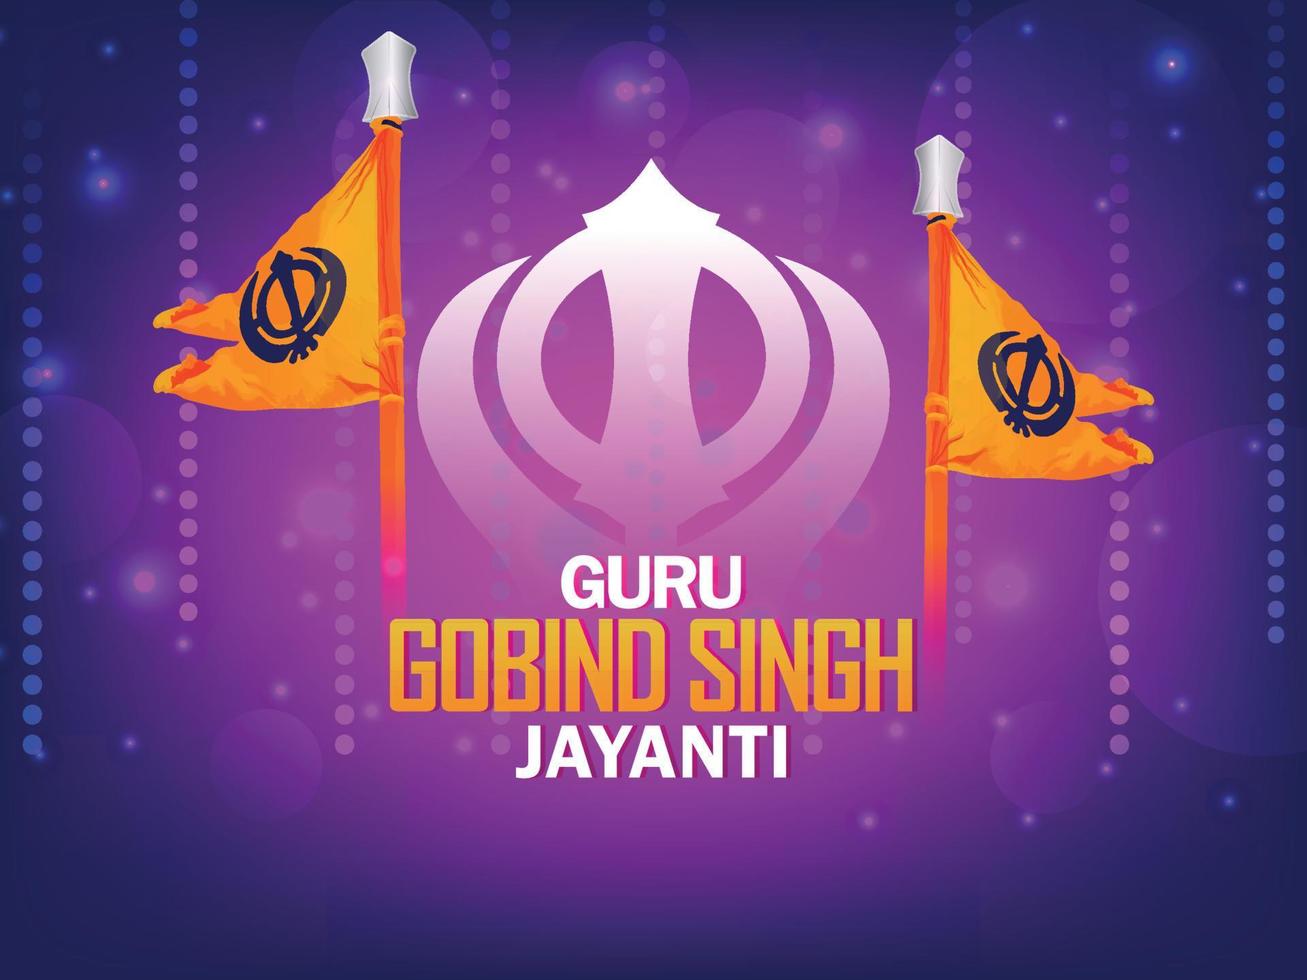 guru gobind singh jayanti cartão comemorativo vetor